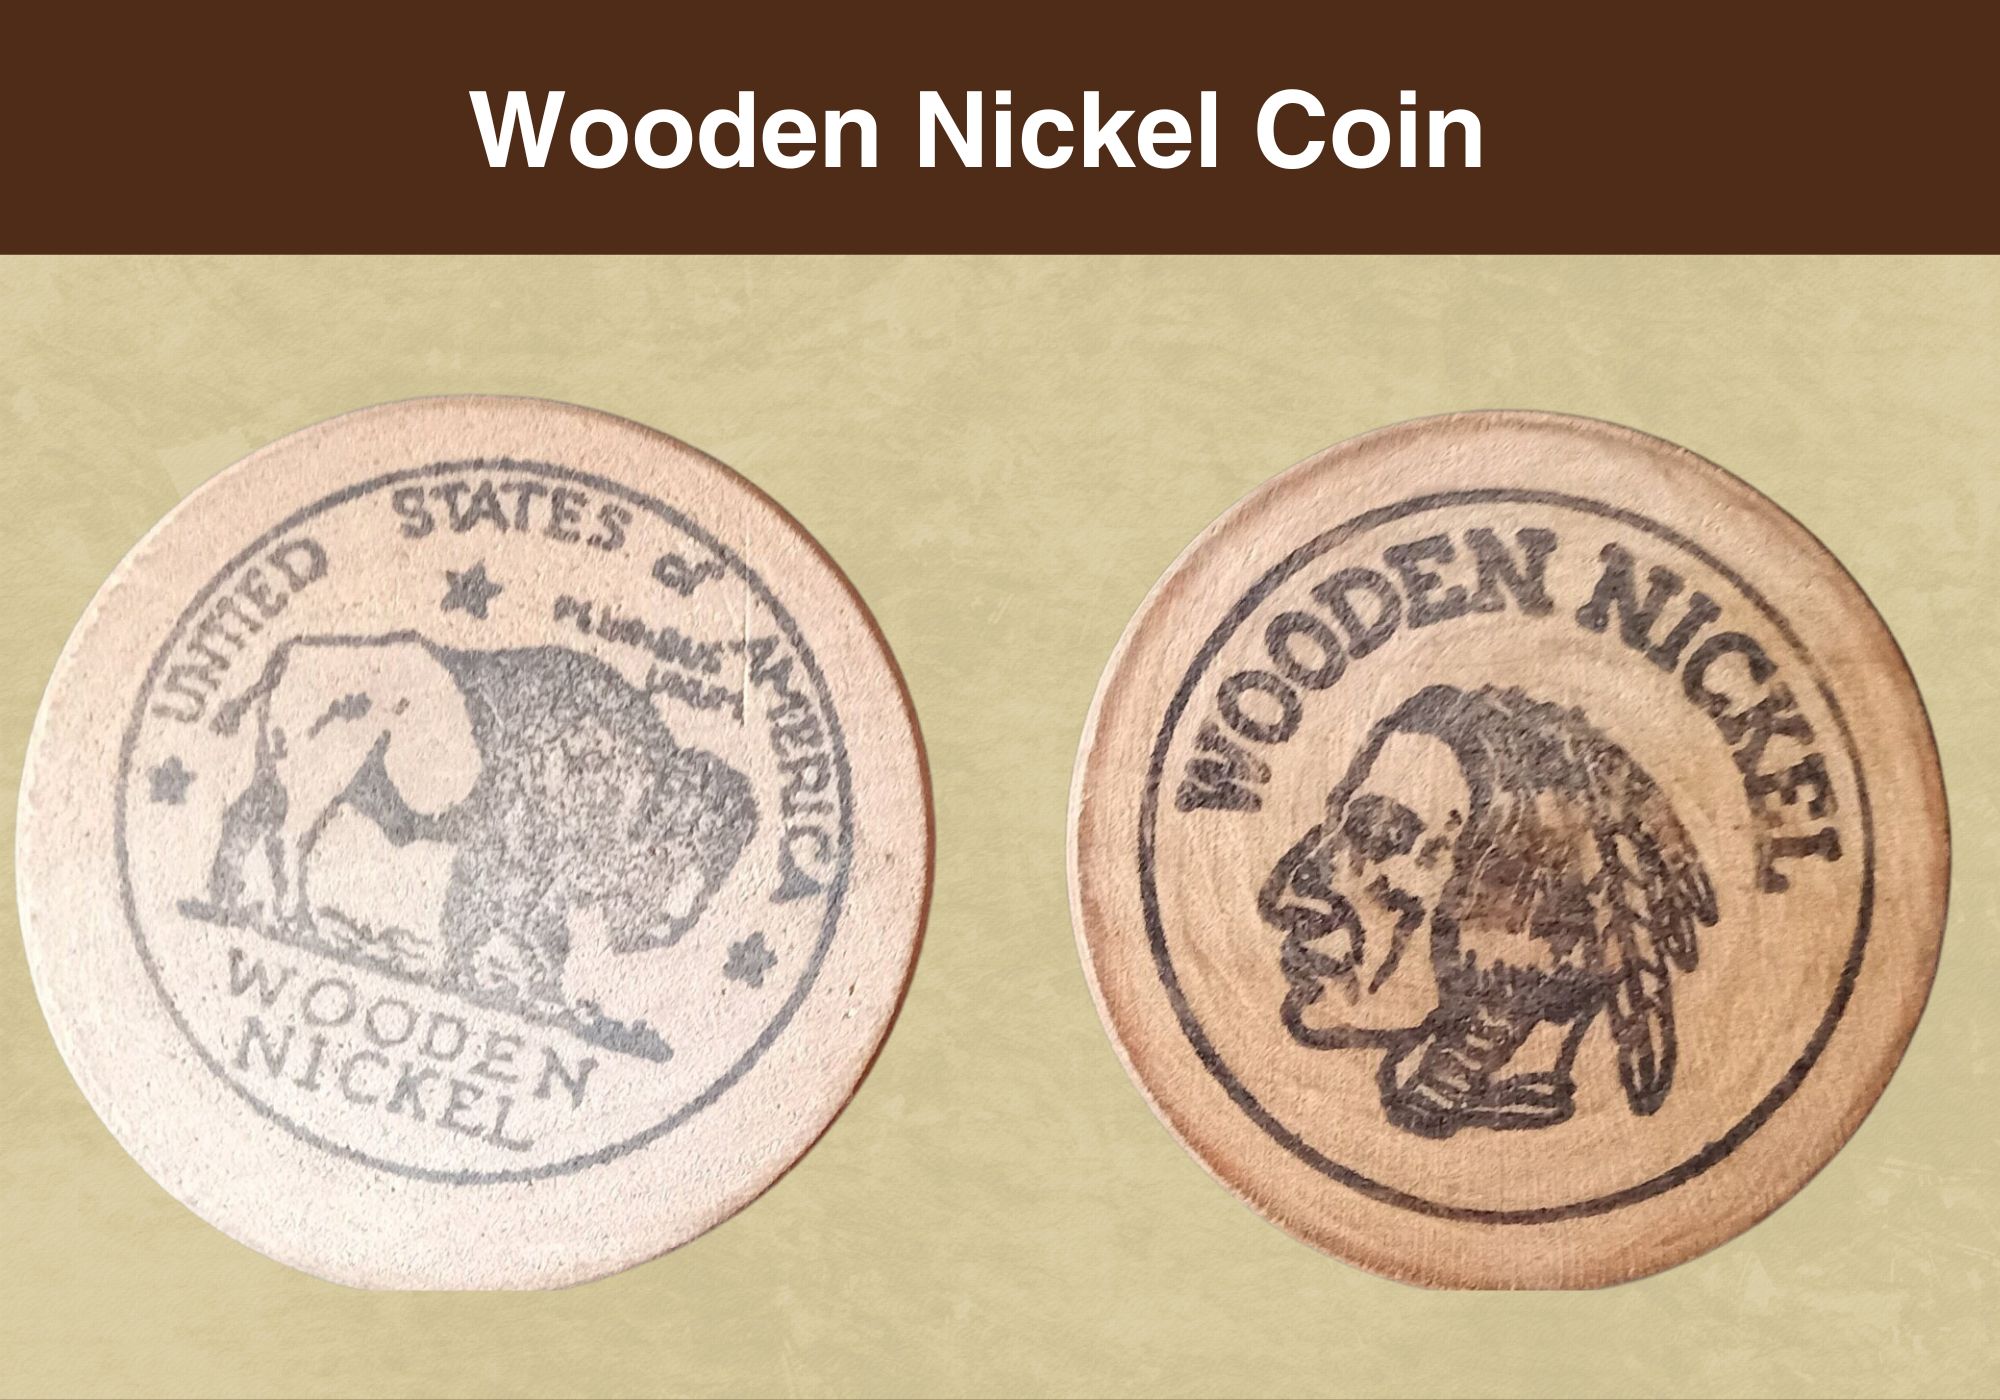 Nickel Wooden Nickel Coin Value